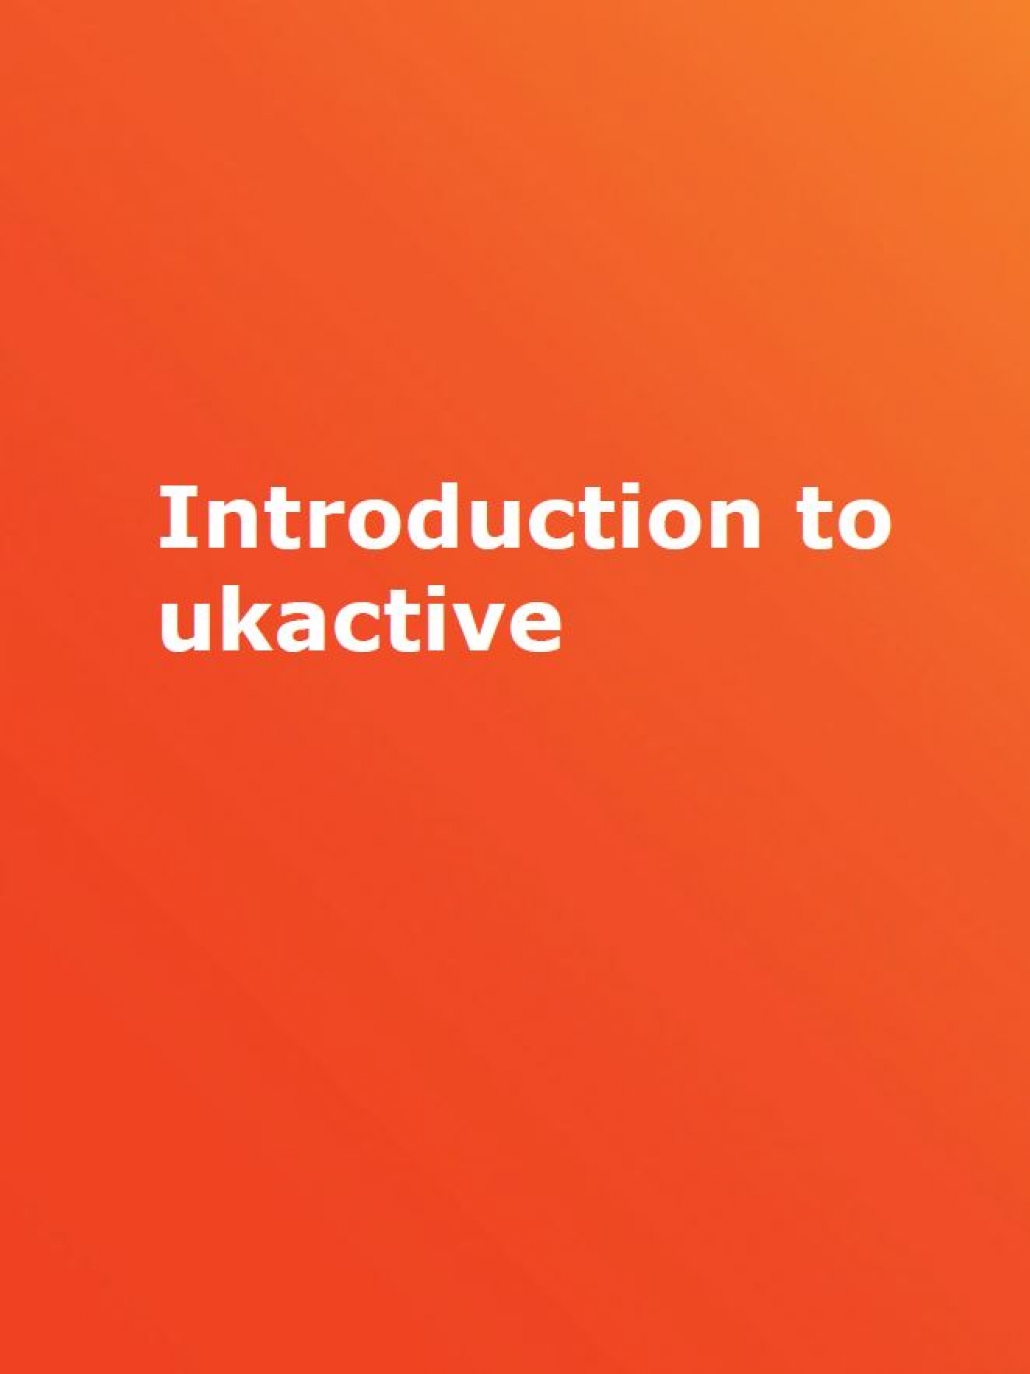 ukactive presentation